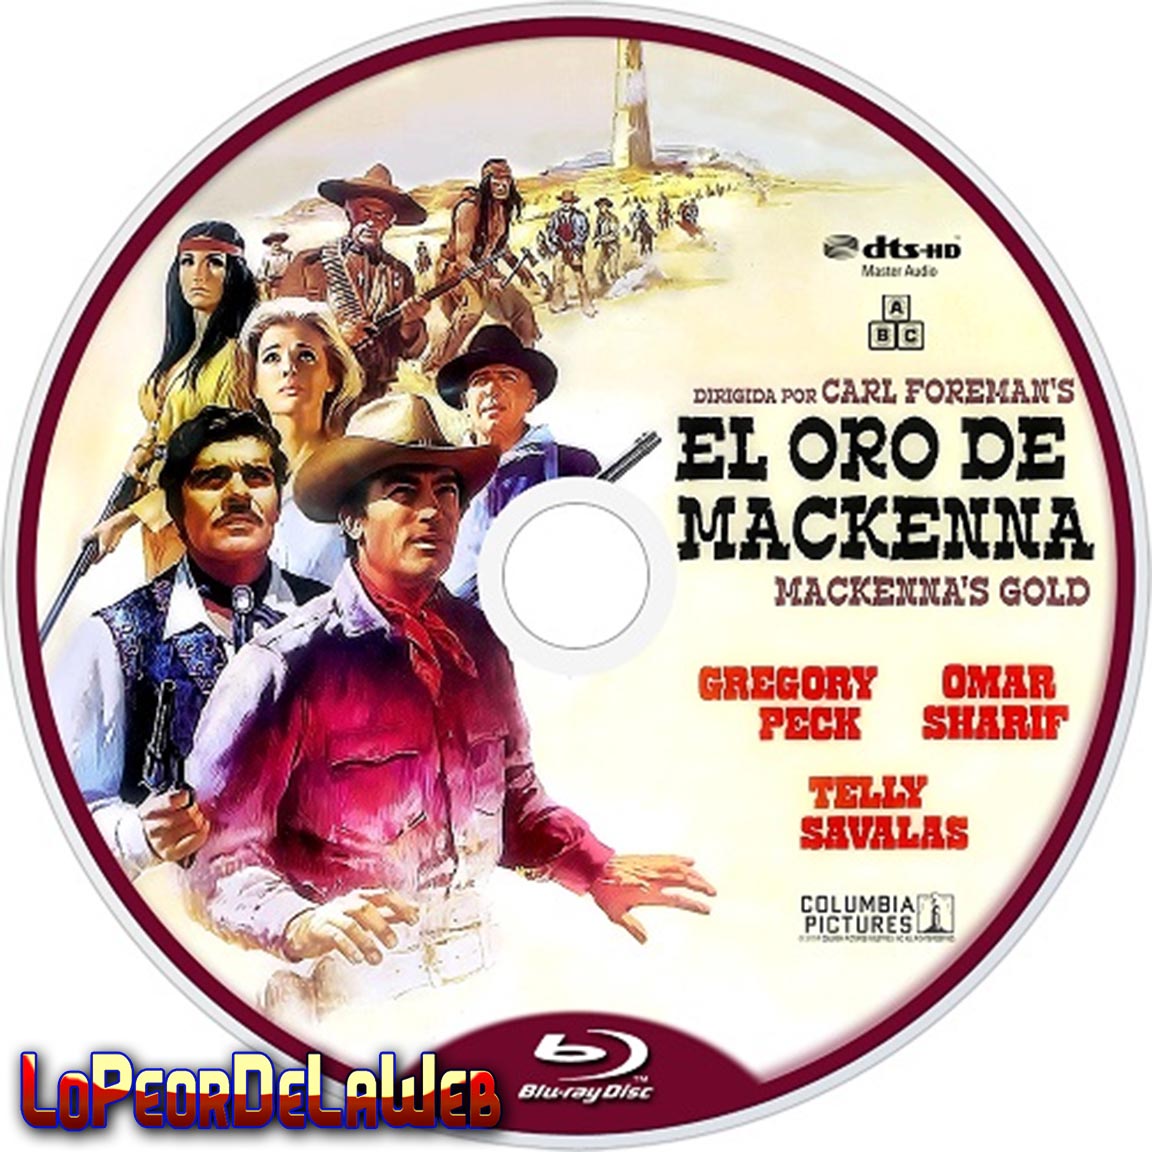 El Oro De Mackenna (1969 / G. Peck O. Sharif T. Savallas)